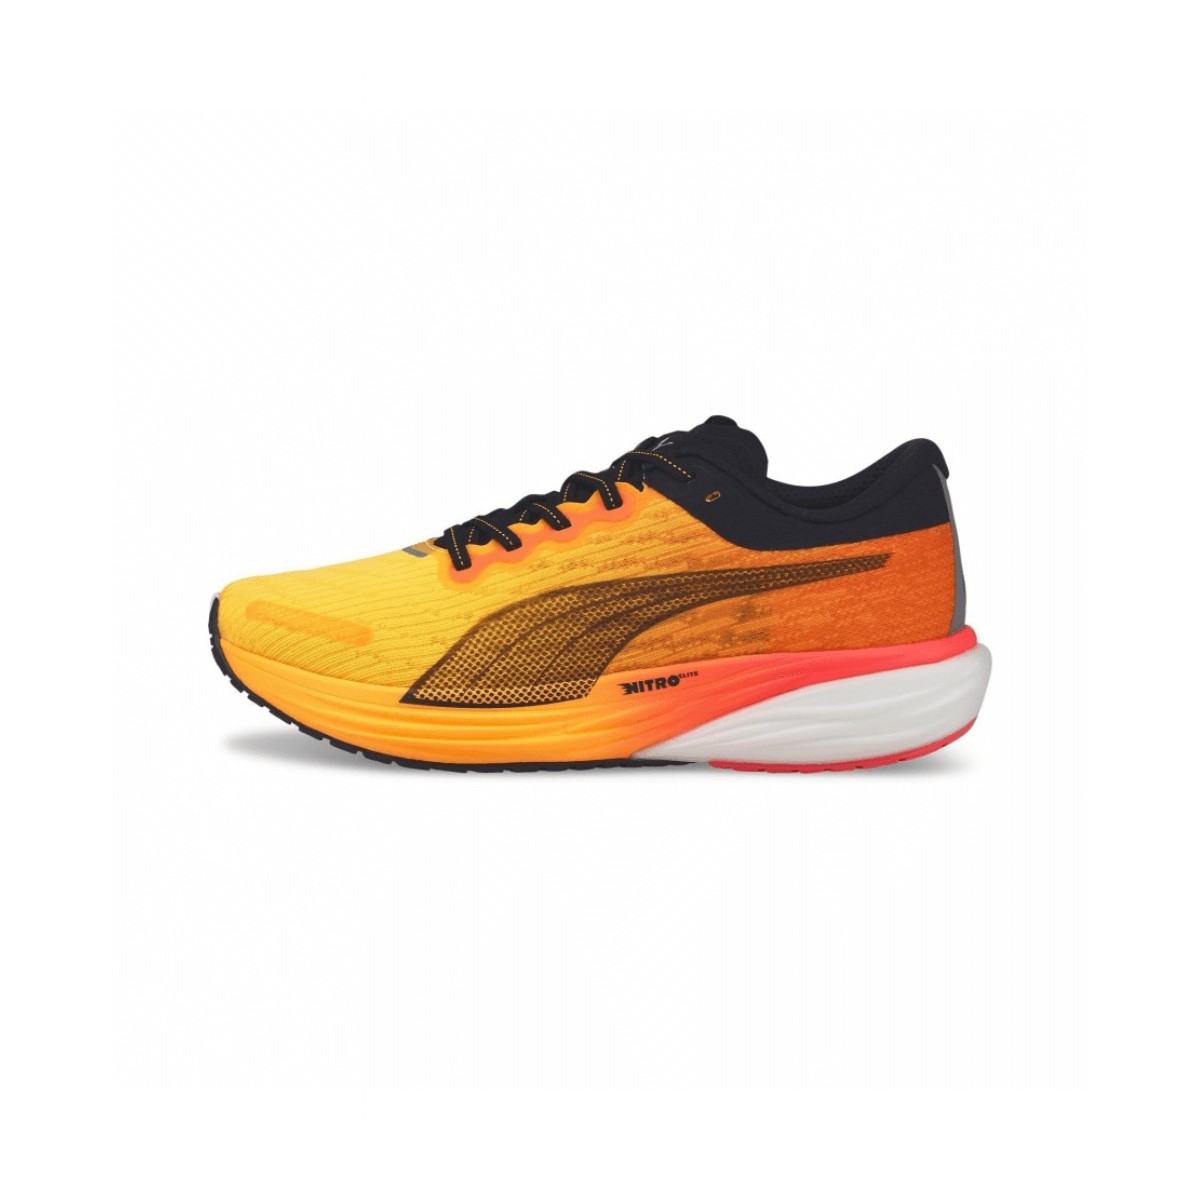 Puma NITRO2 Yellow Orange Sneakers at Best